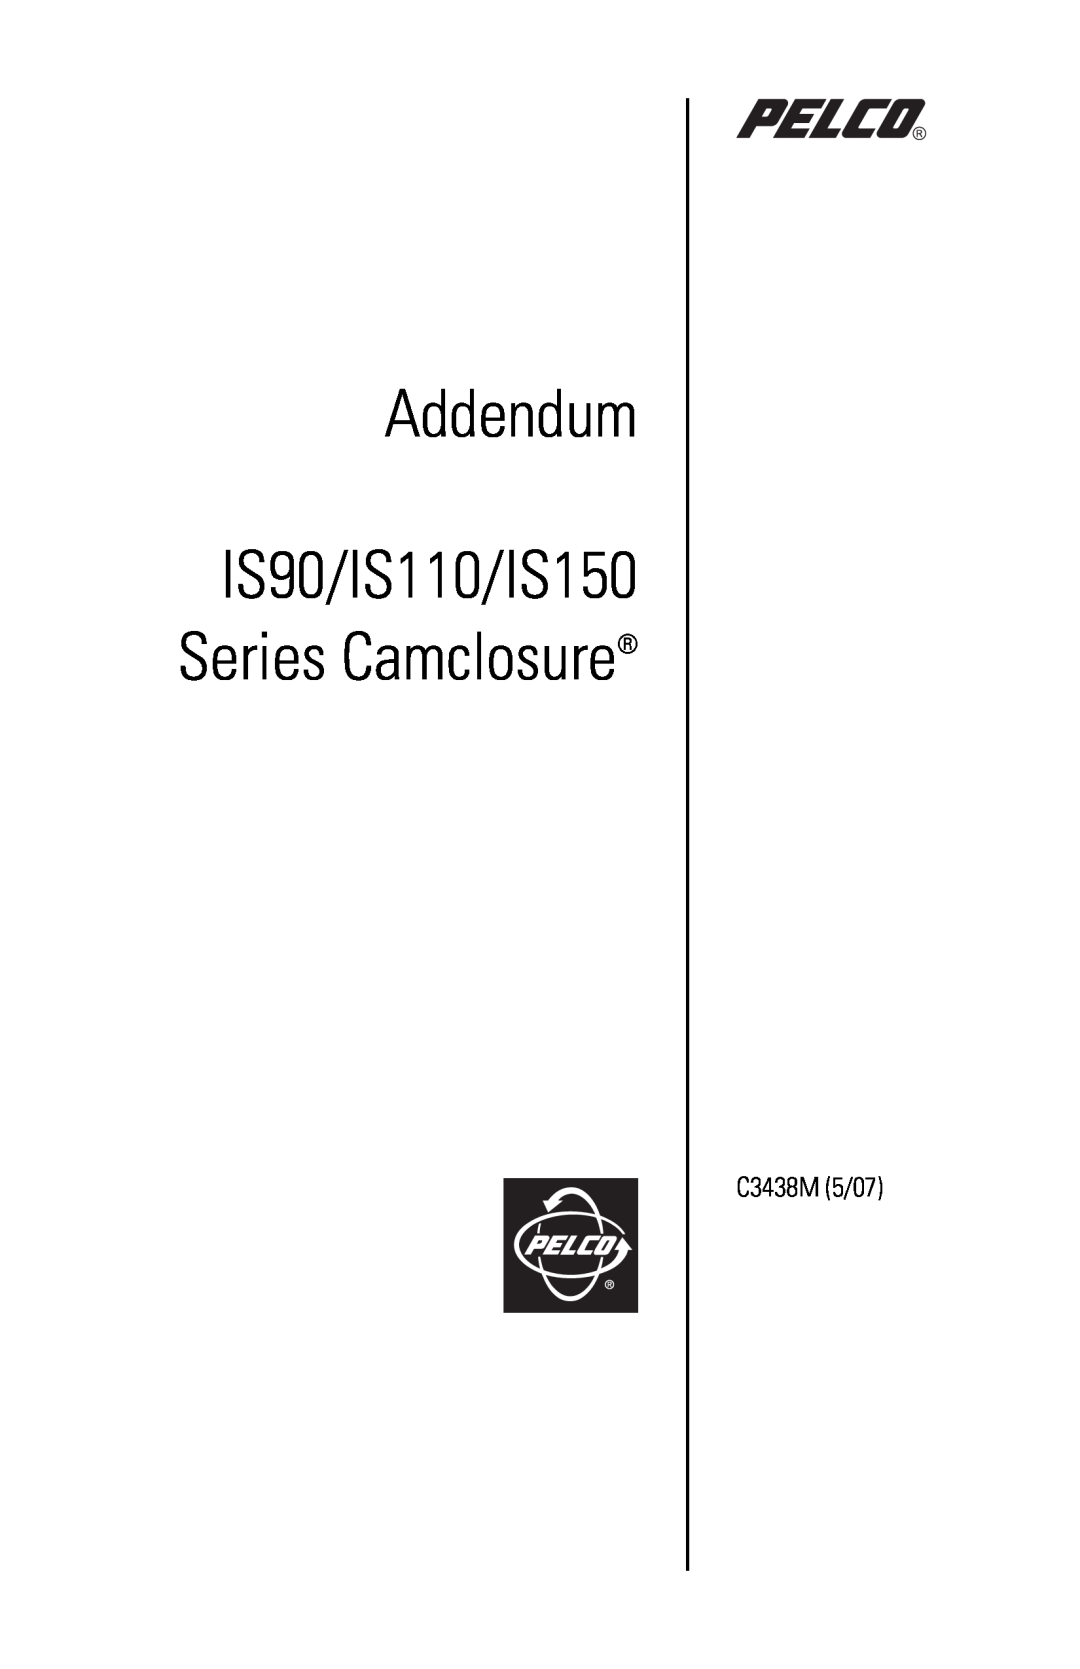 Pelco manual Addendum IS90/IS110/IS150 Series Camclosure, C3438M 5/07 